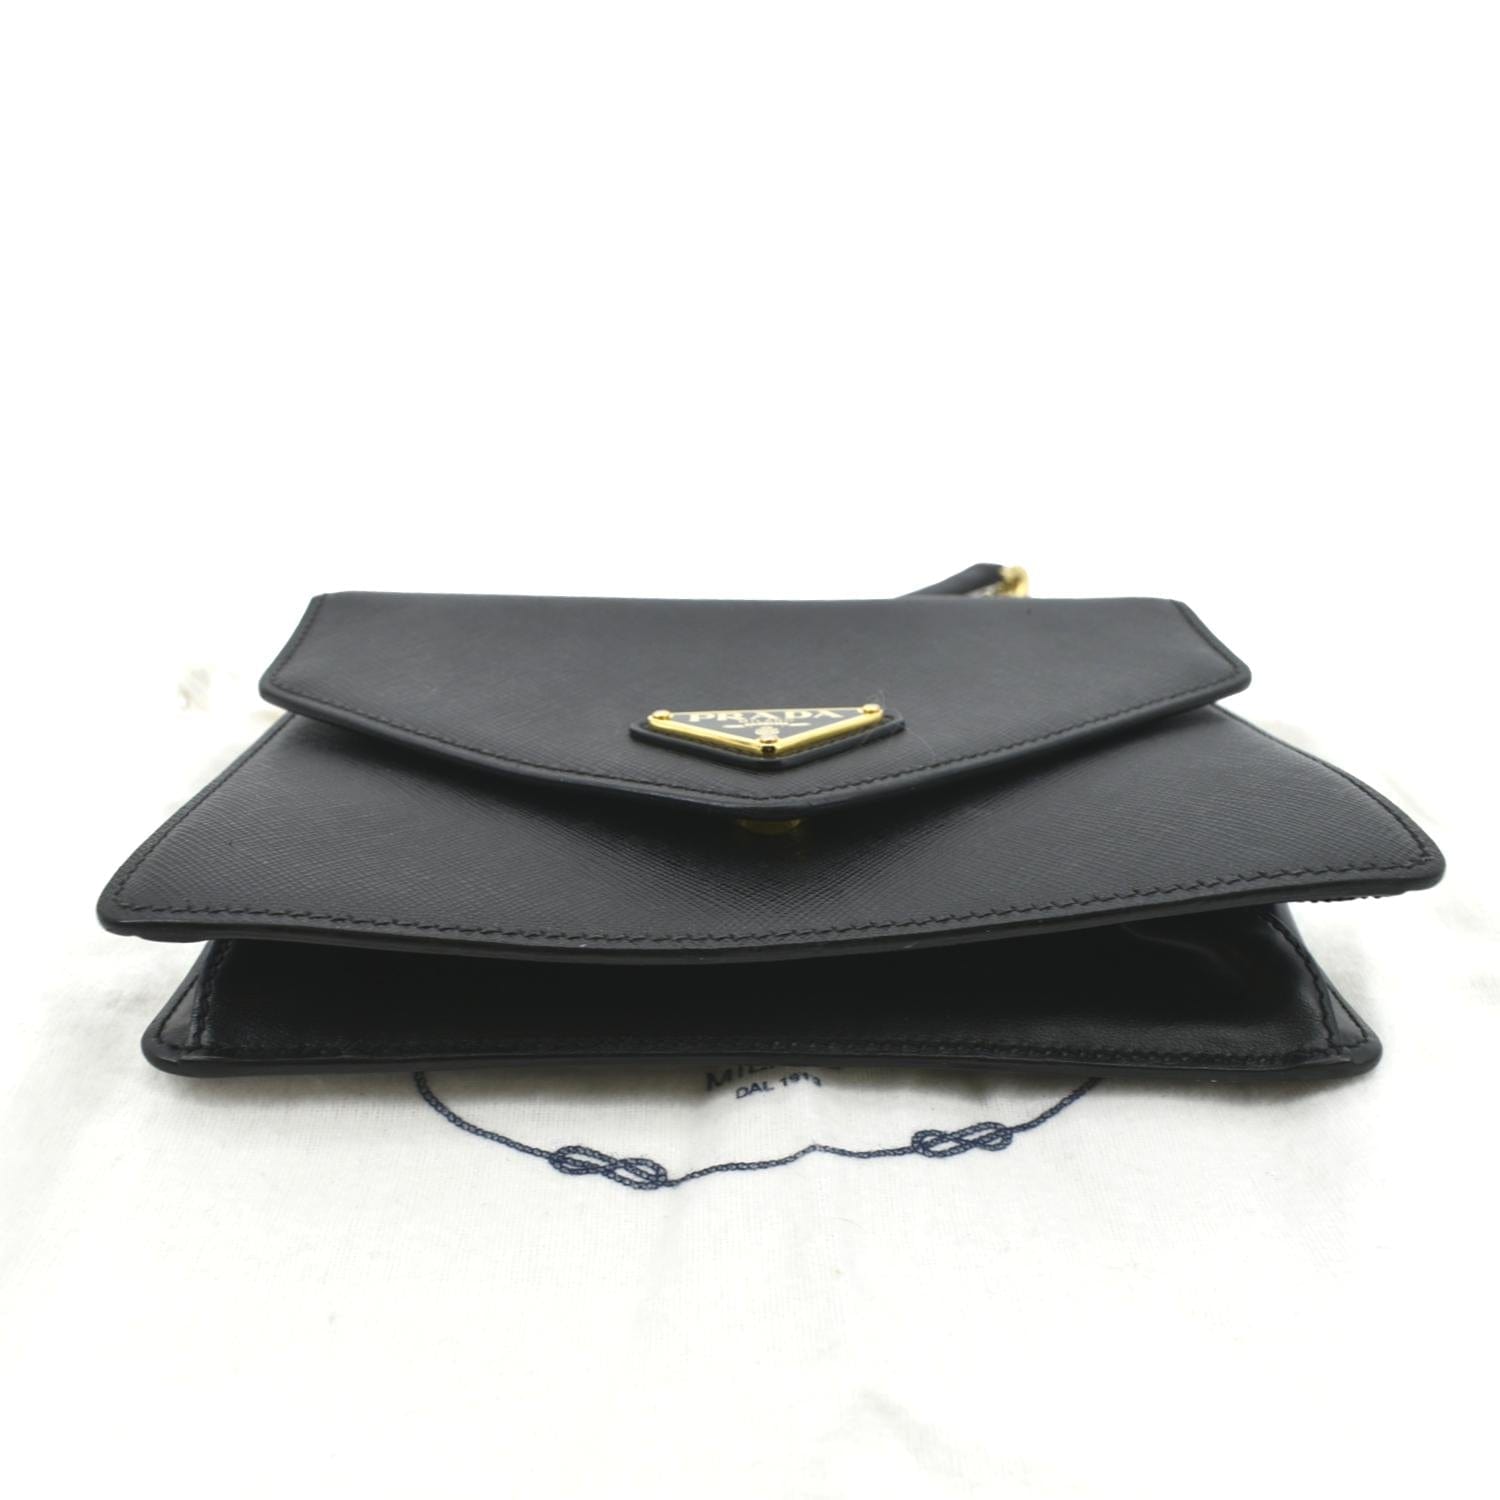 Prada Monochrome Chain Crossbody Saffiano Leather Shoulder Bag New